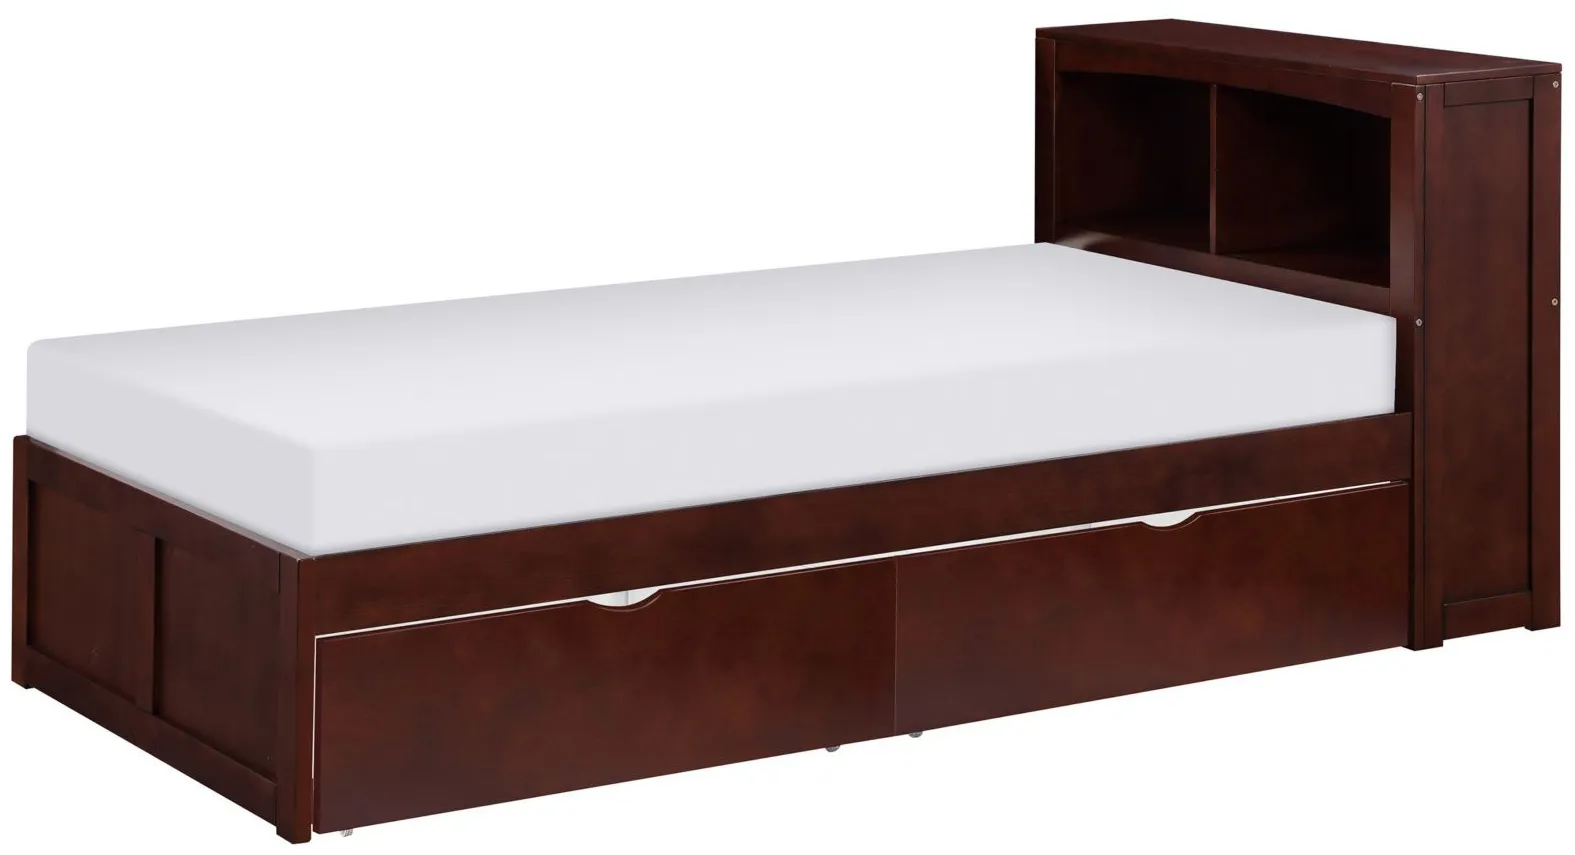 Shannon Headboard Cubby W/ Underbed Drawer Storage Bed in Dark Cherry by Homelegance